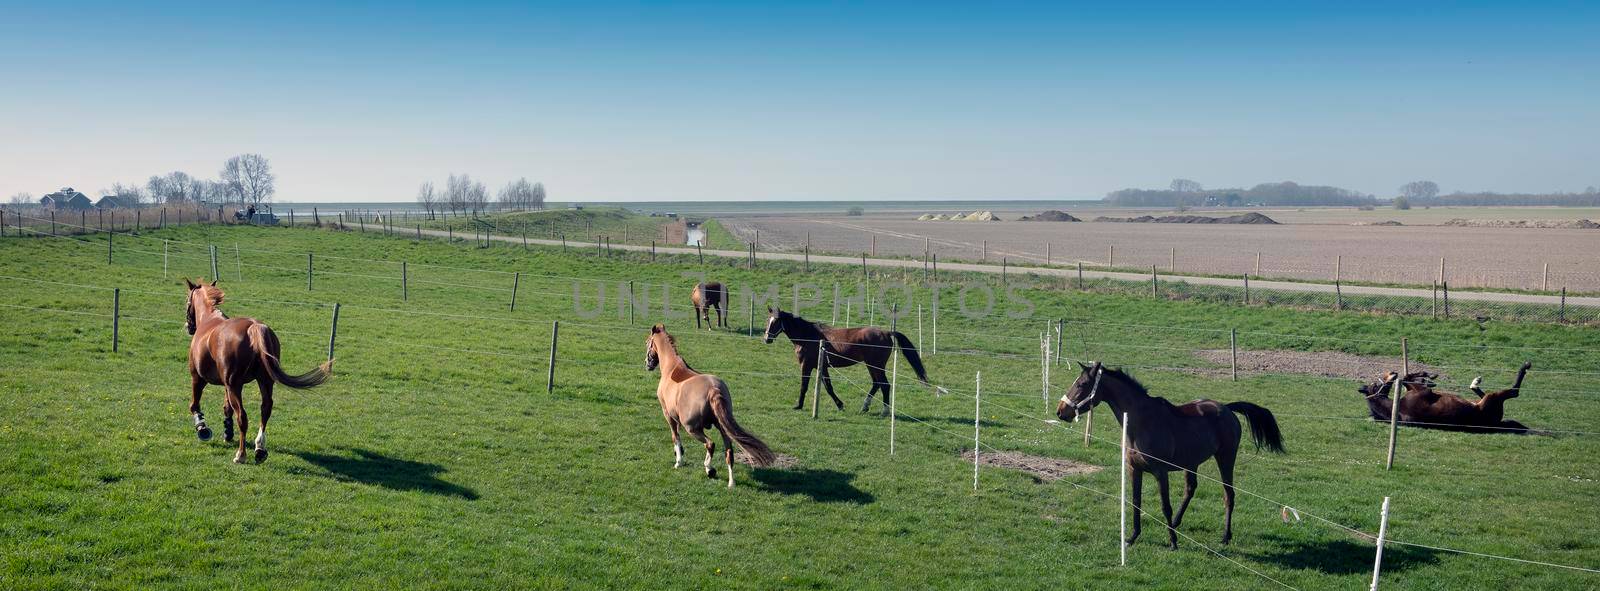 horses in countryside landscape under blue sky in dutch province of zeeland by ahavelaar